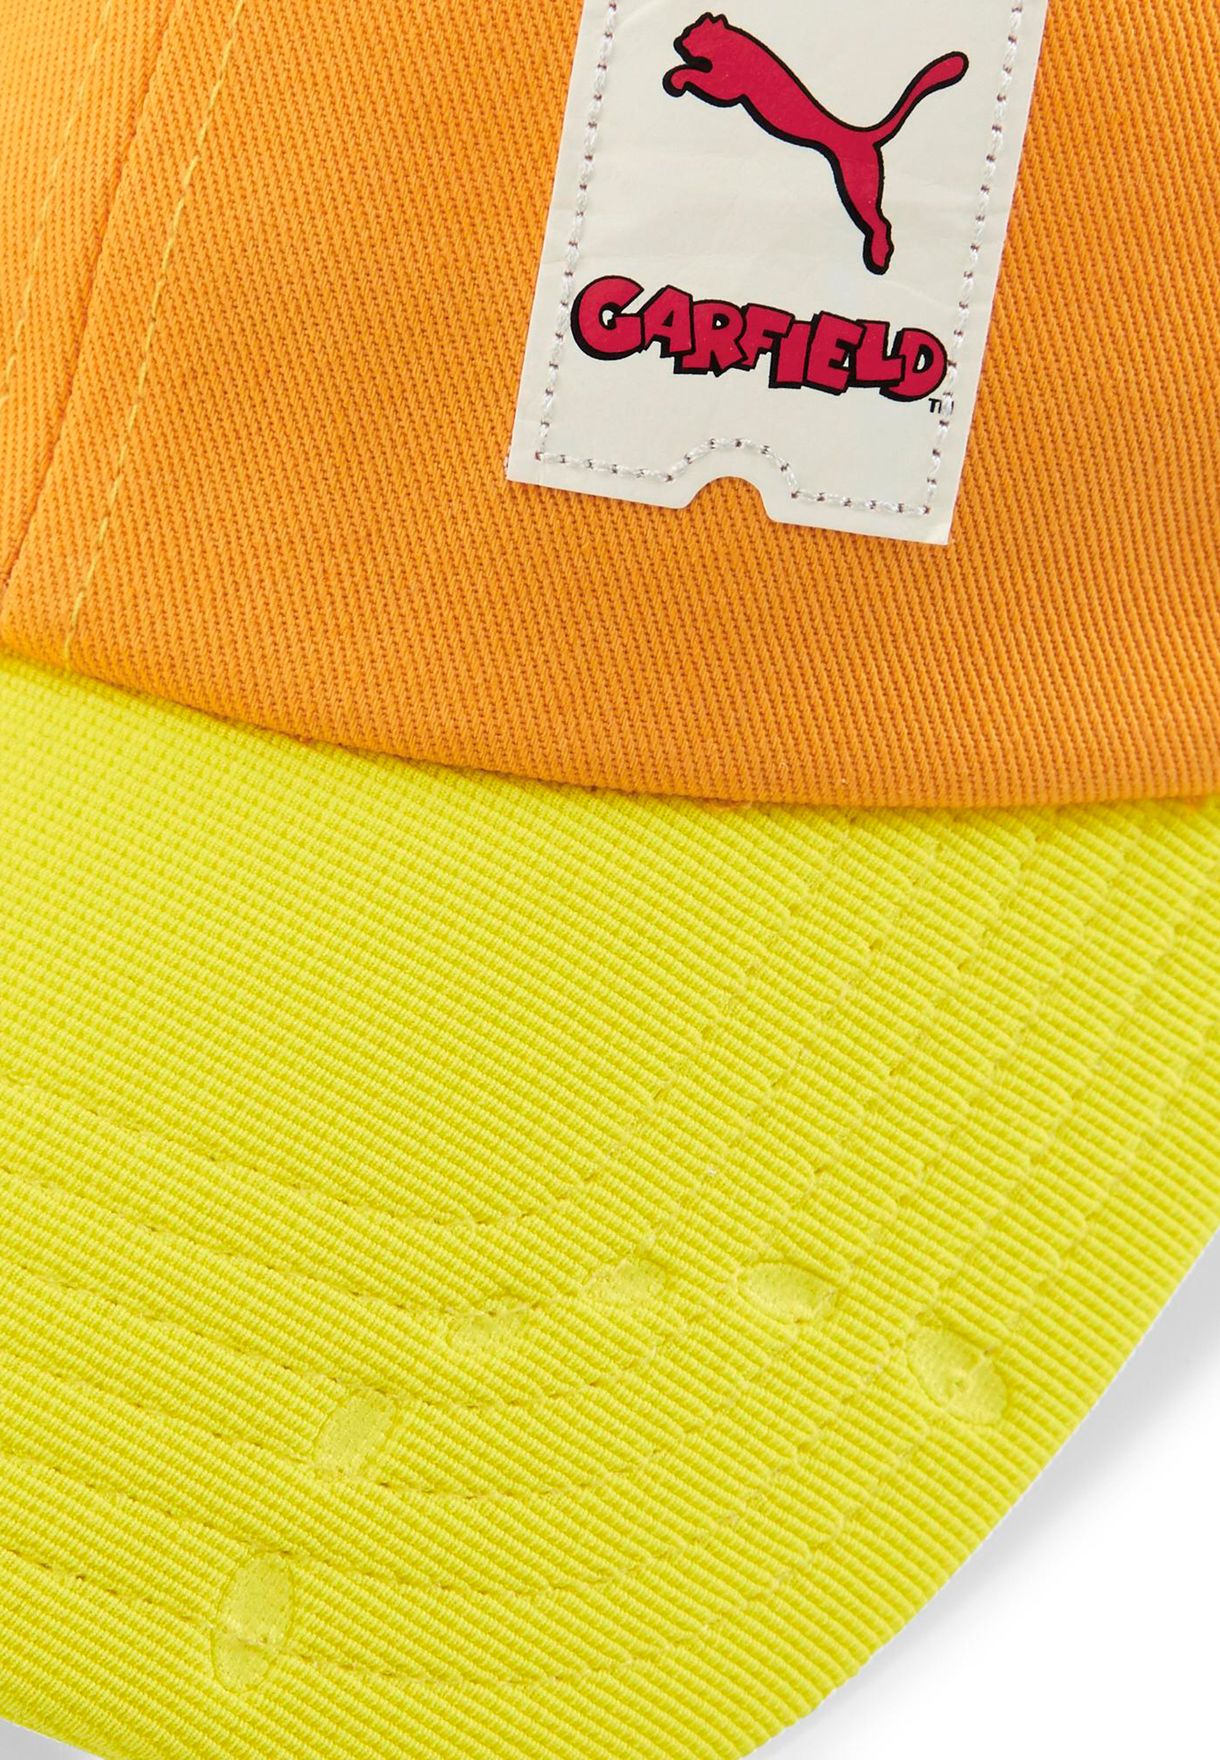 Garfield Baseball Cap